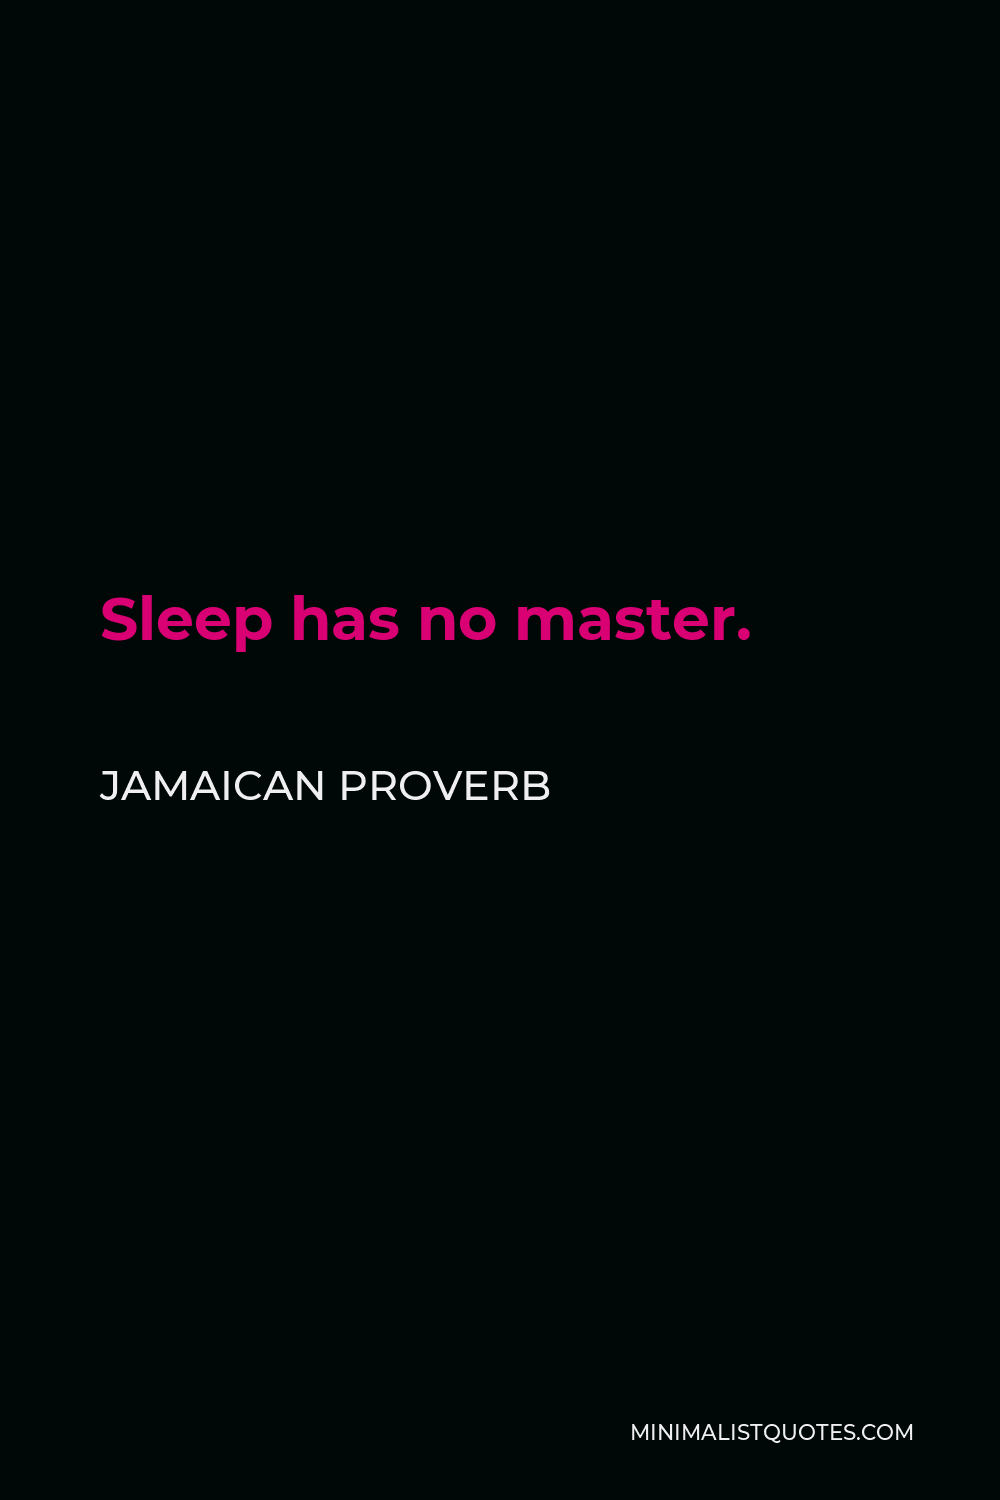 Jamaican Proverb Quote - Sleep has no master.